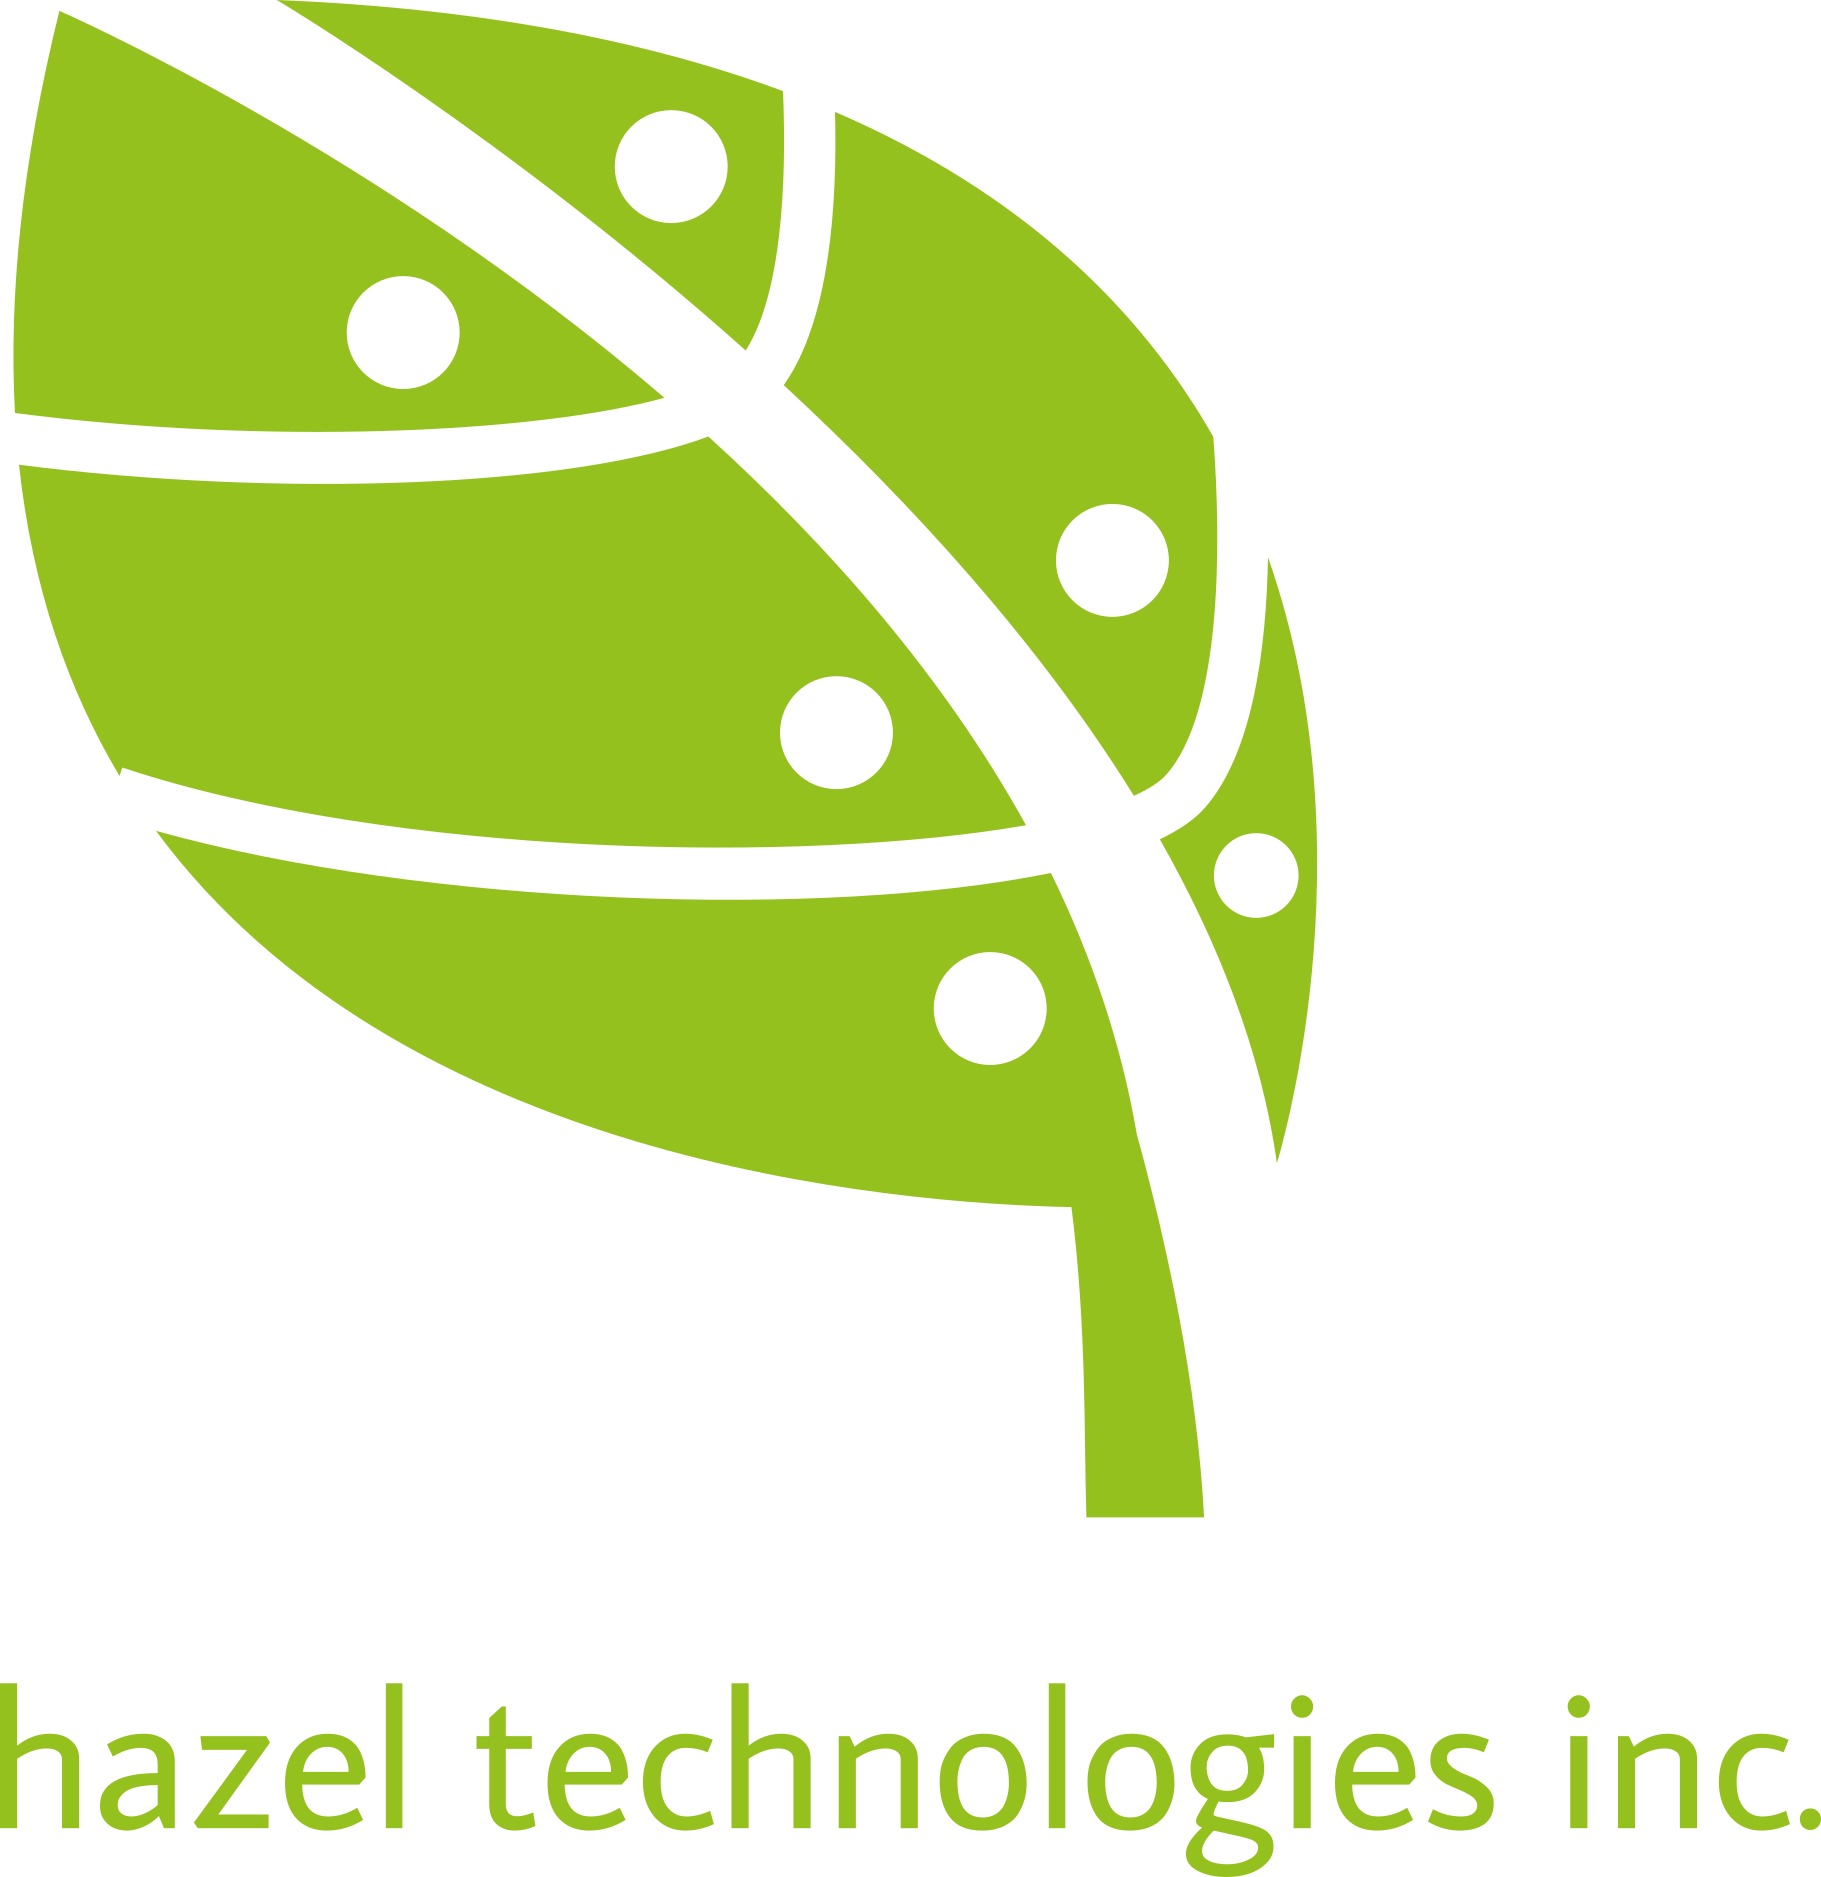 Hazel Technologies Inc. hires postharvest scientist - Fruit Growers News